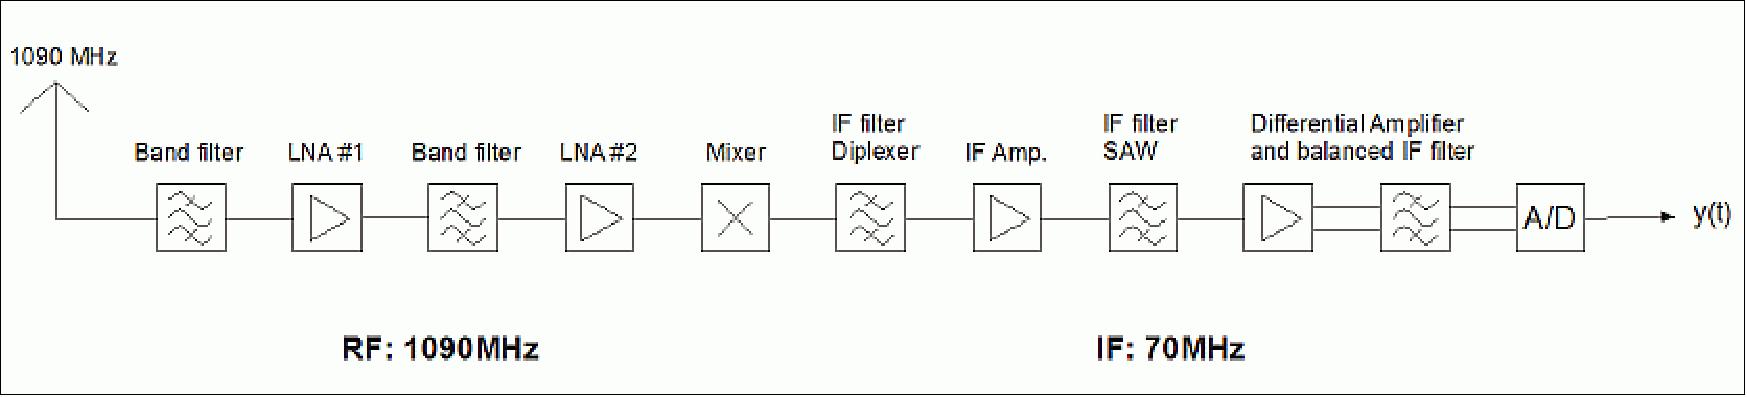 Figure 88: Single superheterodyne receiver concept (image credit: DLR, Ref. 79)